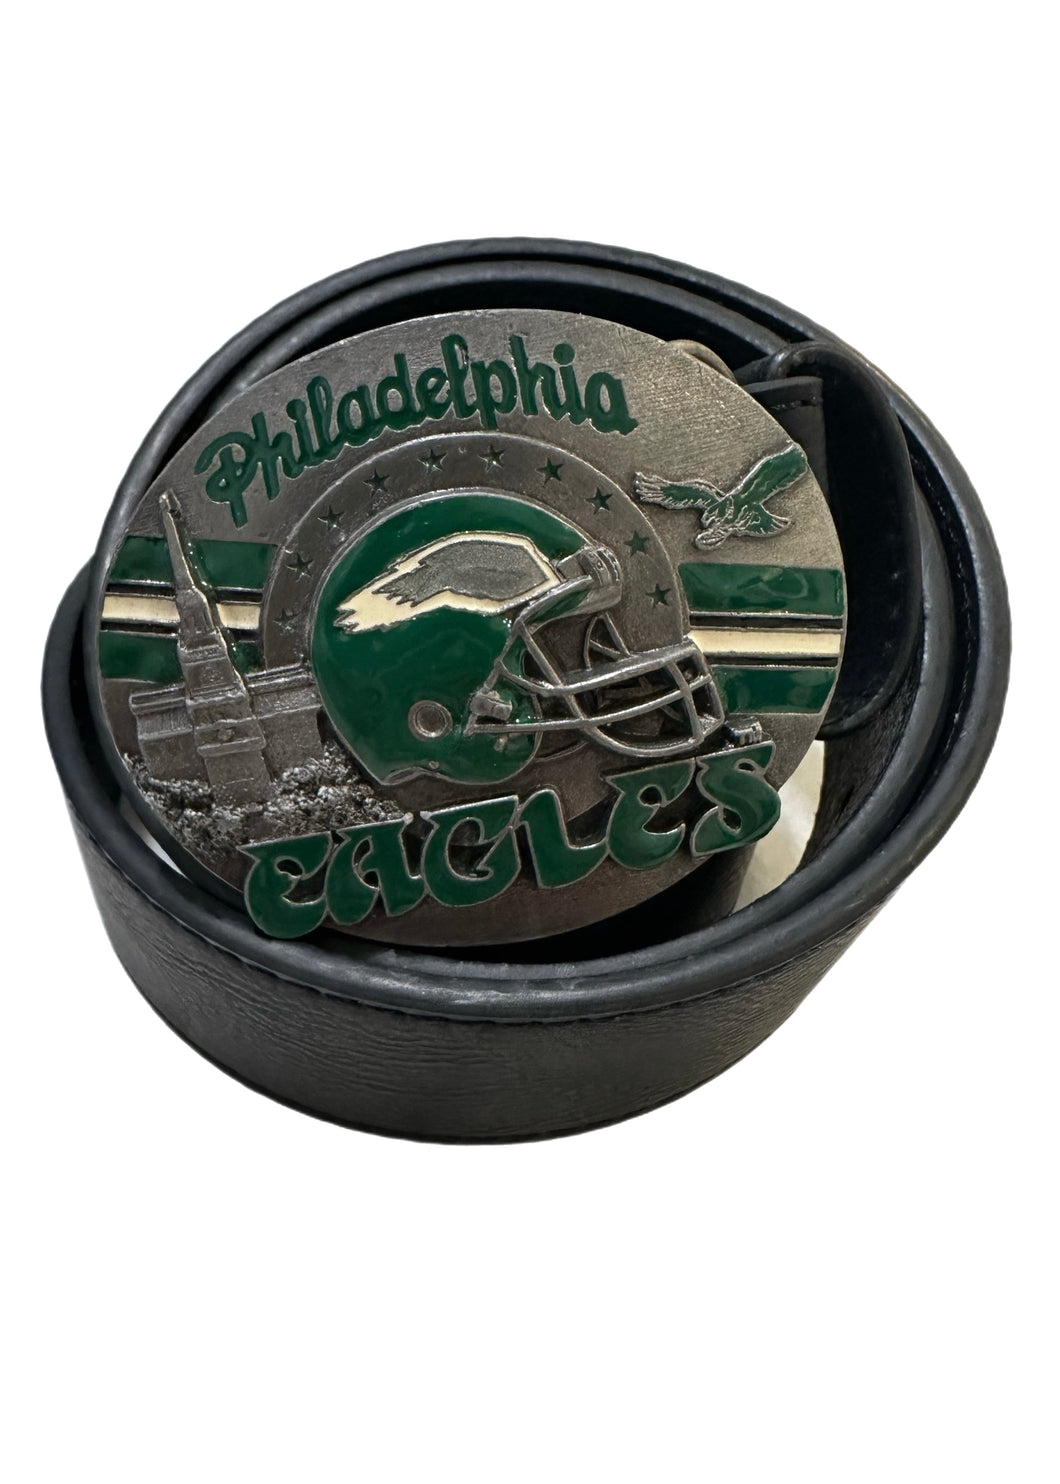 Philadelphia Eagles, Football Vintage 1993 Belt Buckle with New Soft Leather Strap